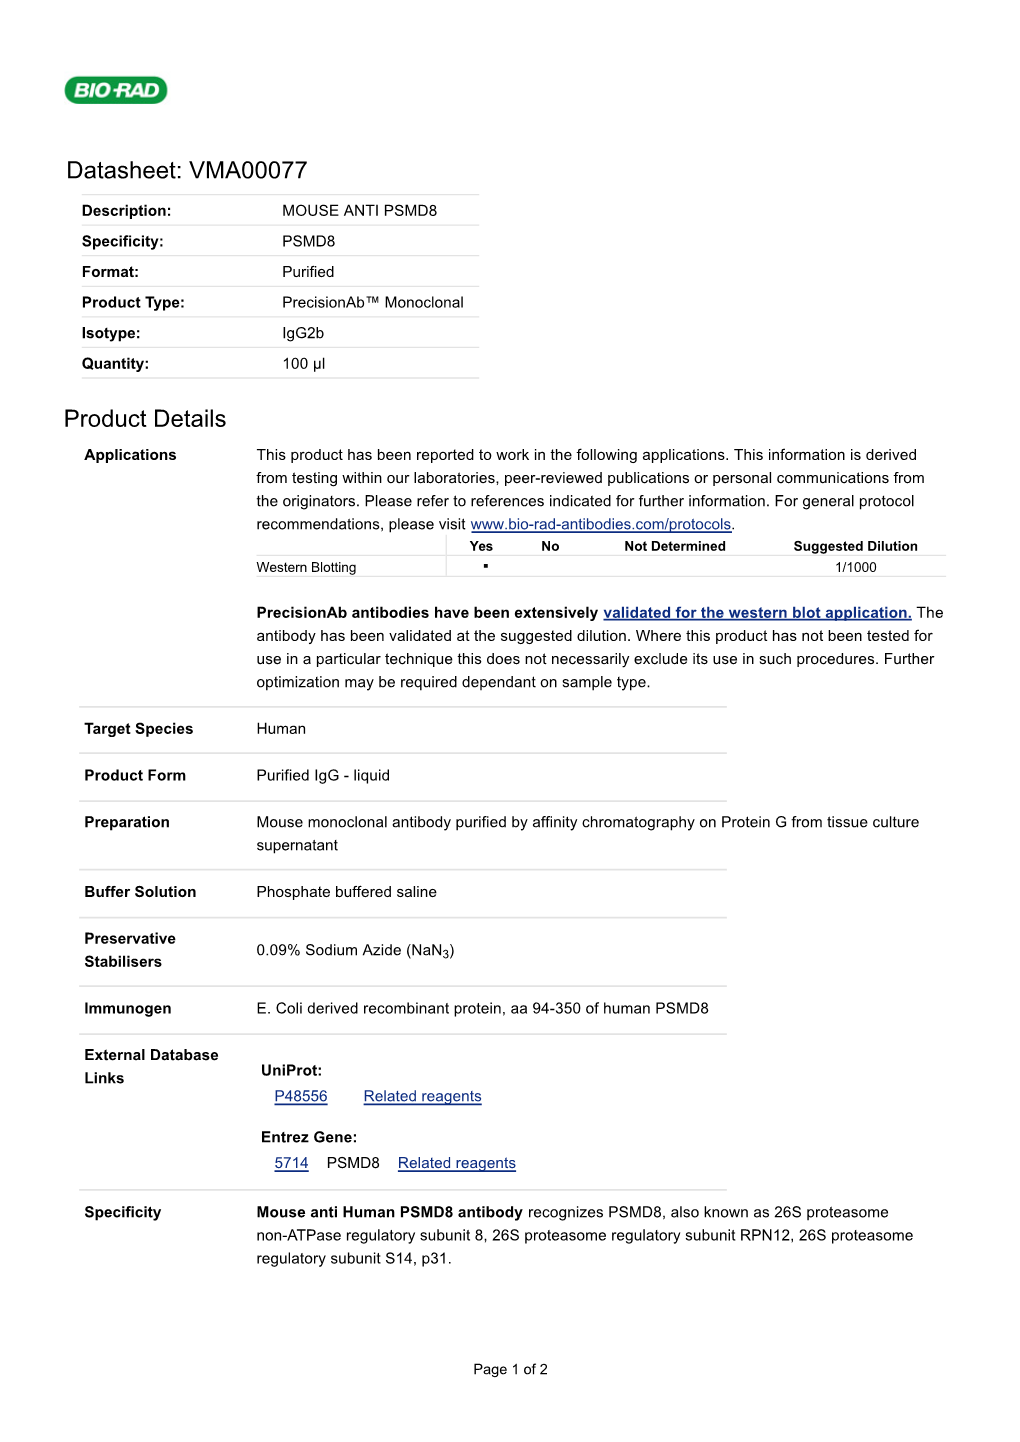 Datasheet: VMA00077 Product Details